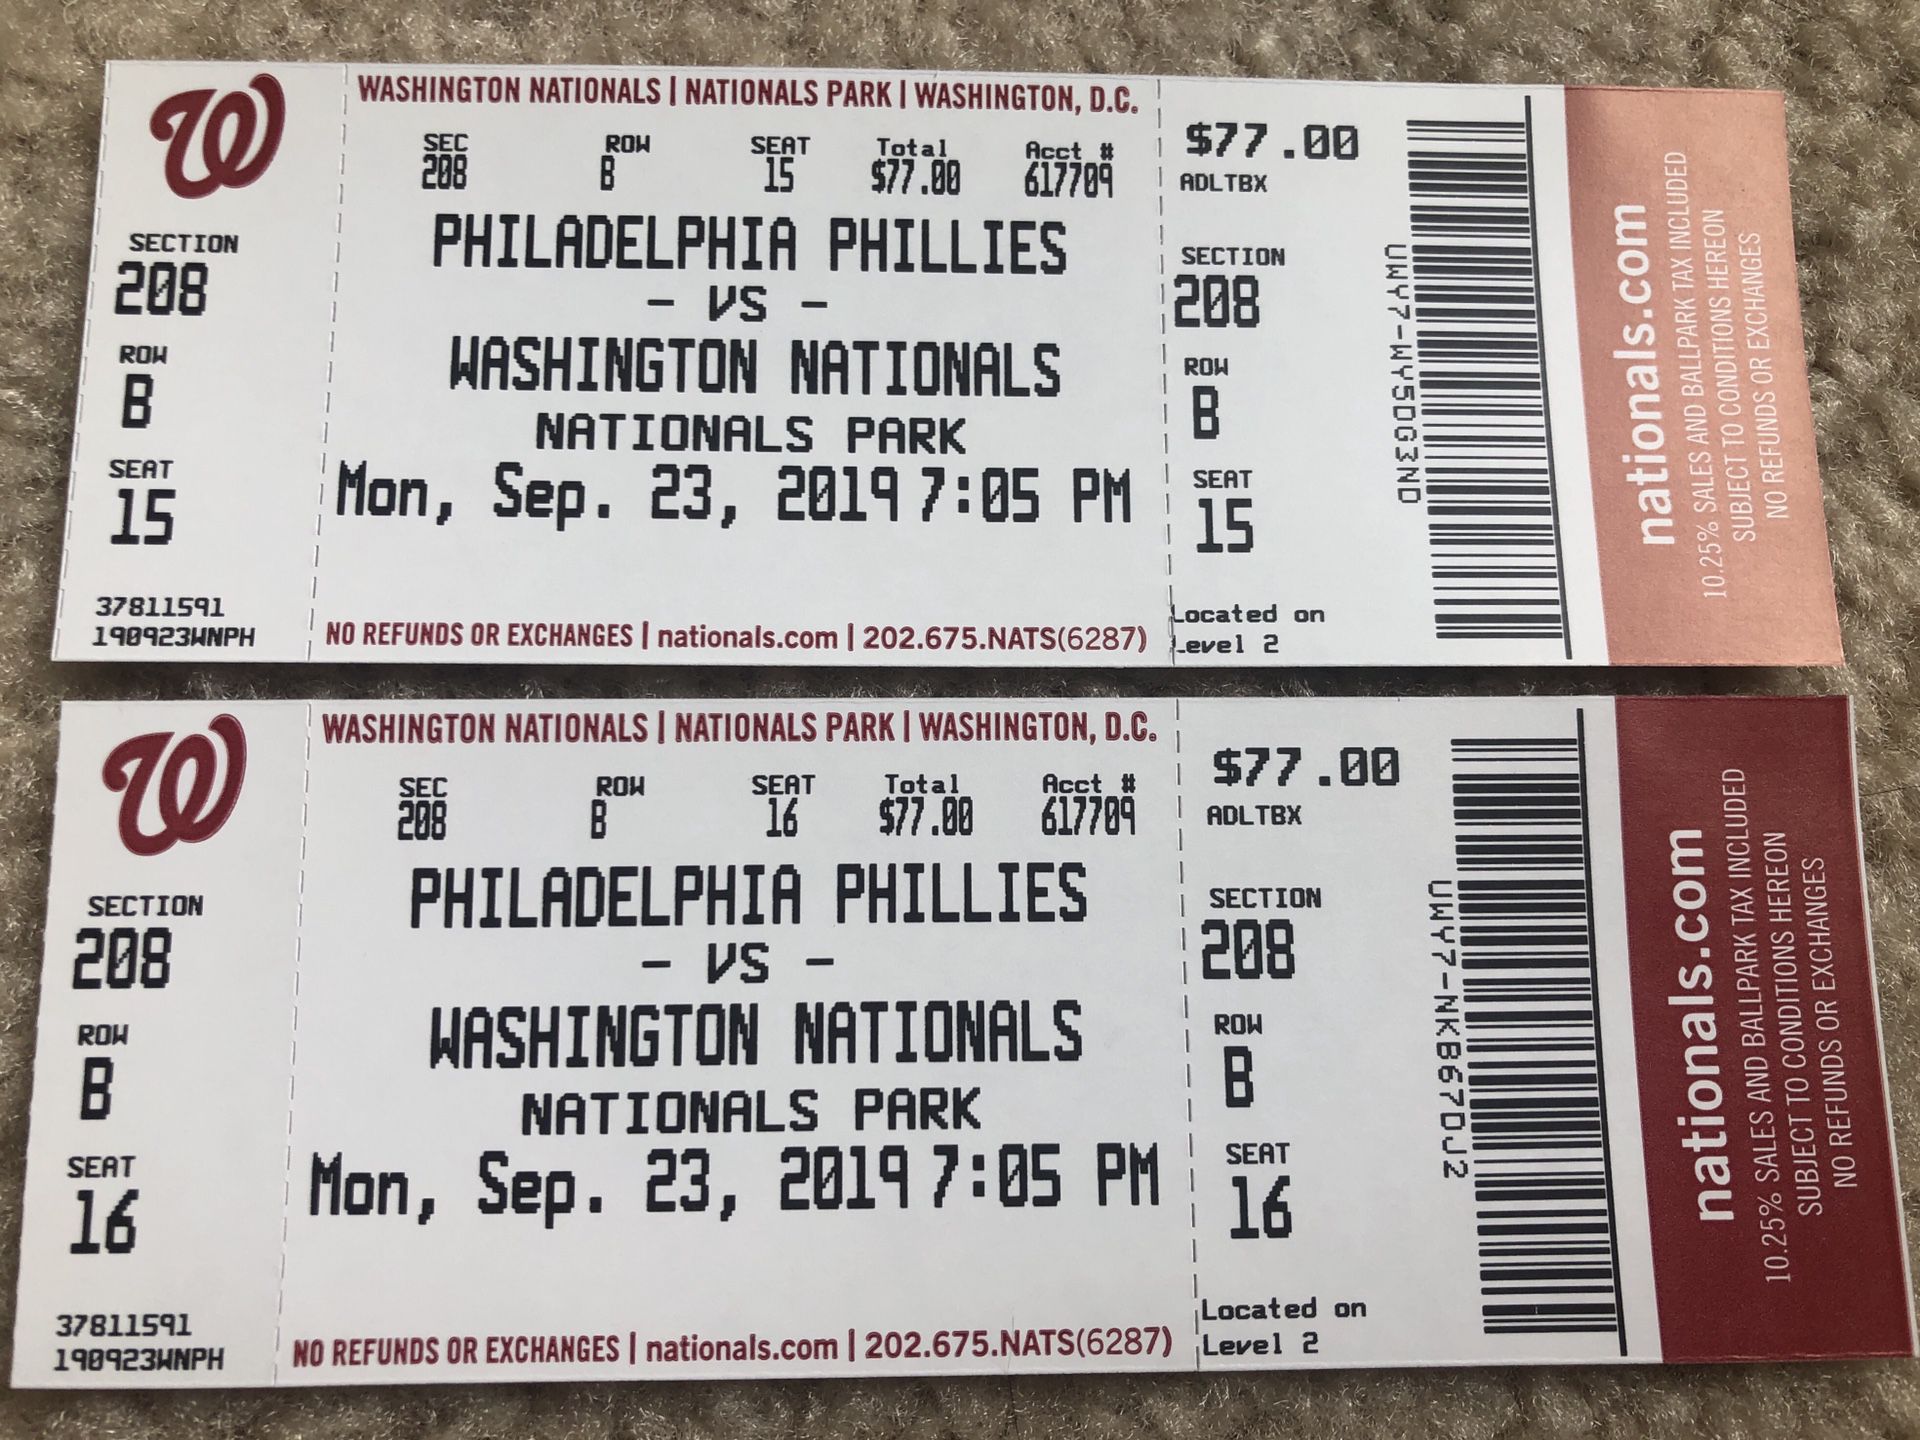 Washington Nationals tickets vs Phillies